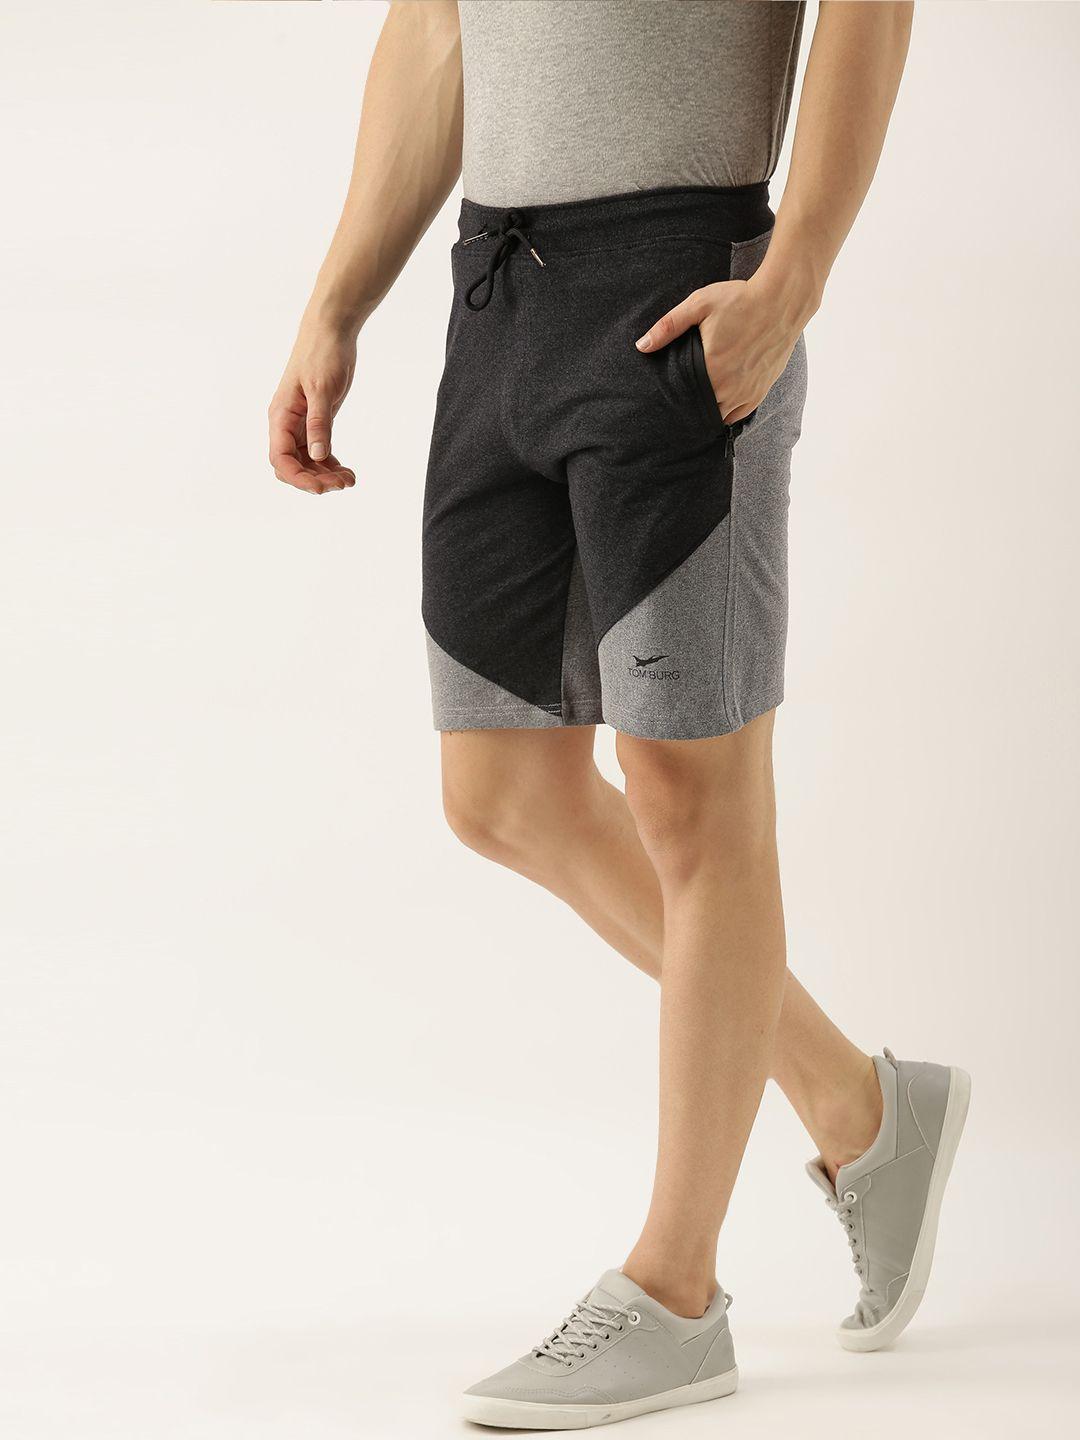 tom burg men black & grey colourblocked mid-rise regular shorts